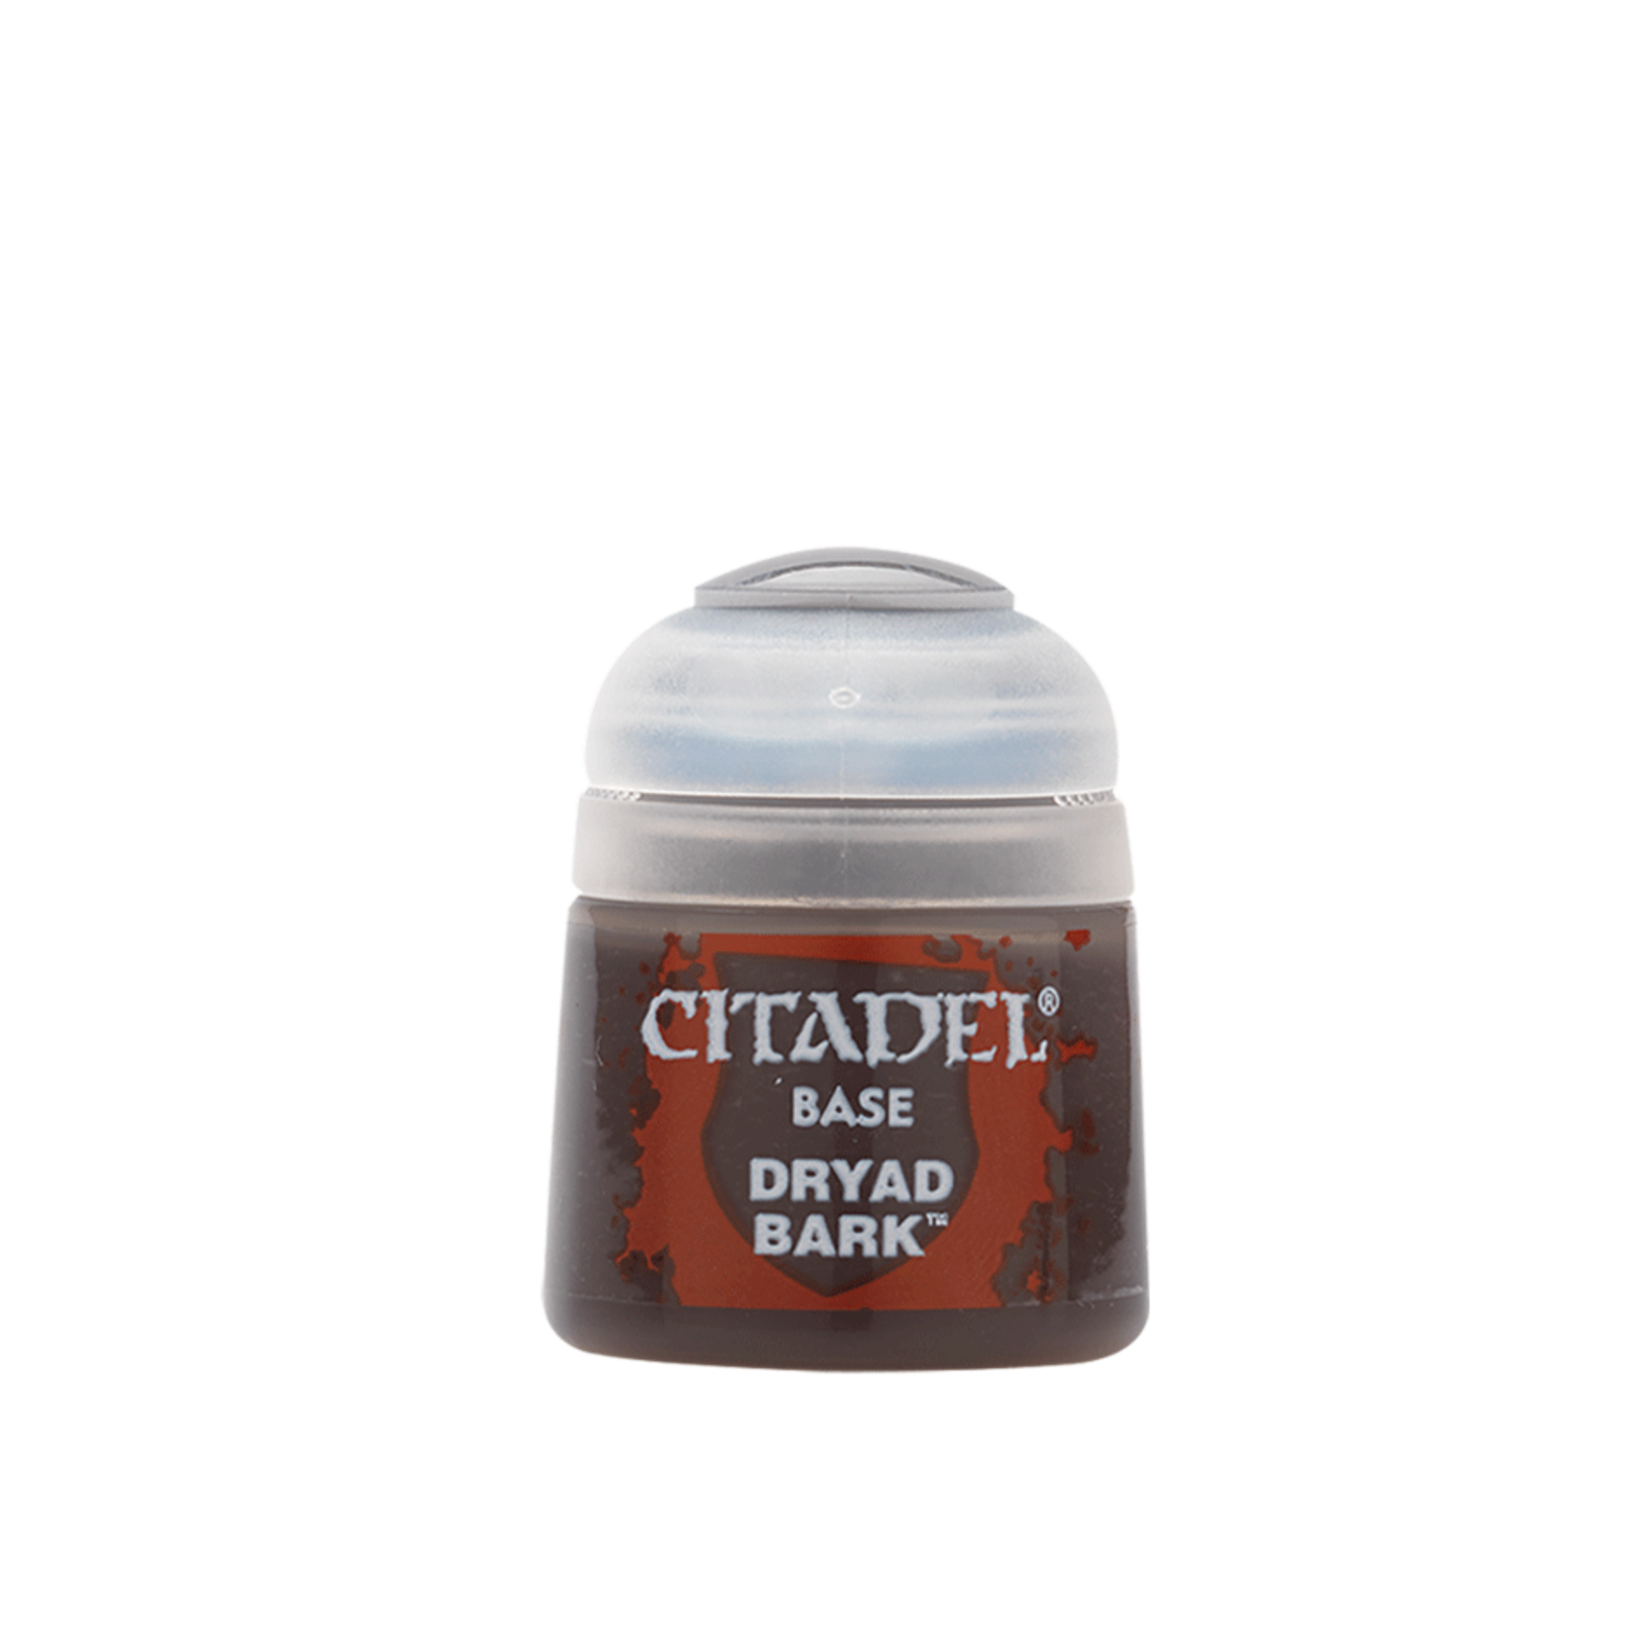 Citadel Base Dryad Bark 12ml pot